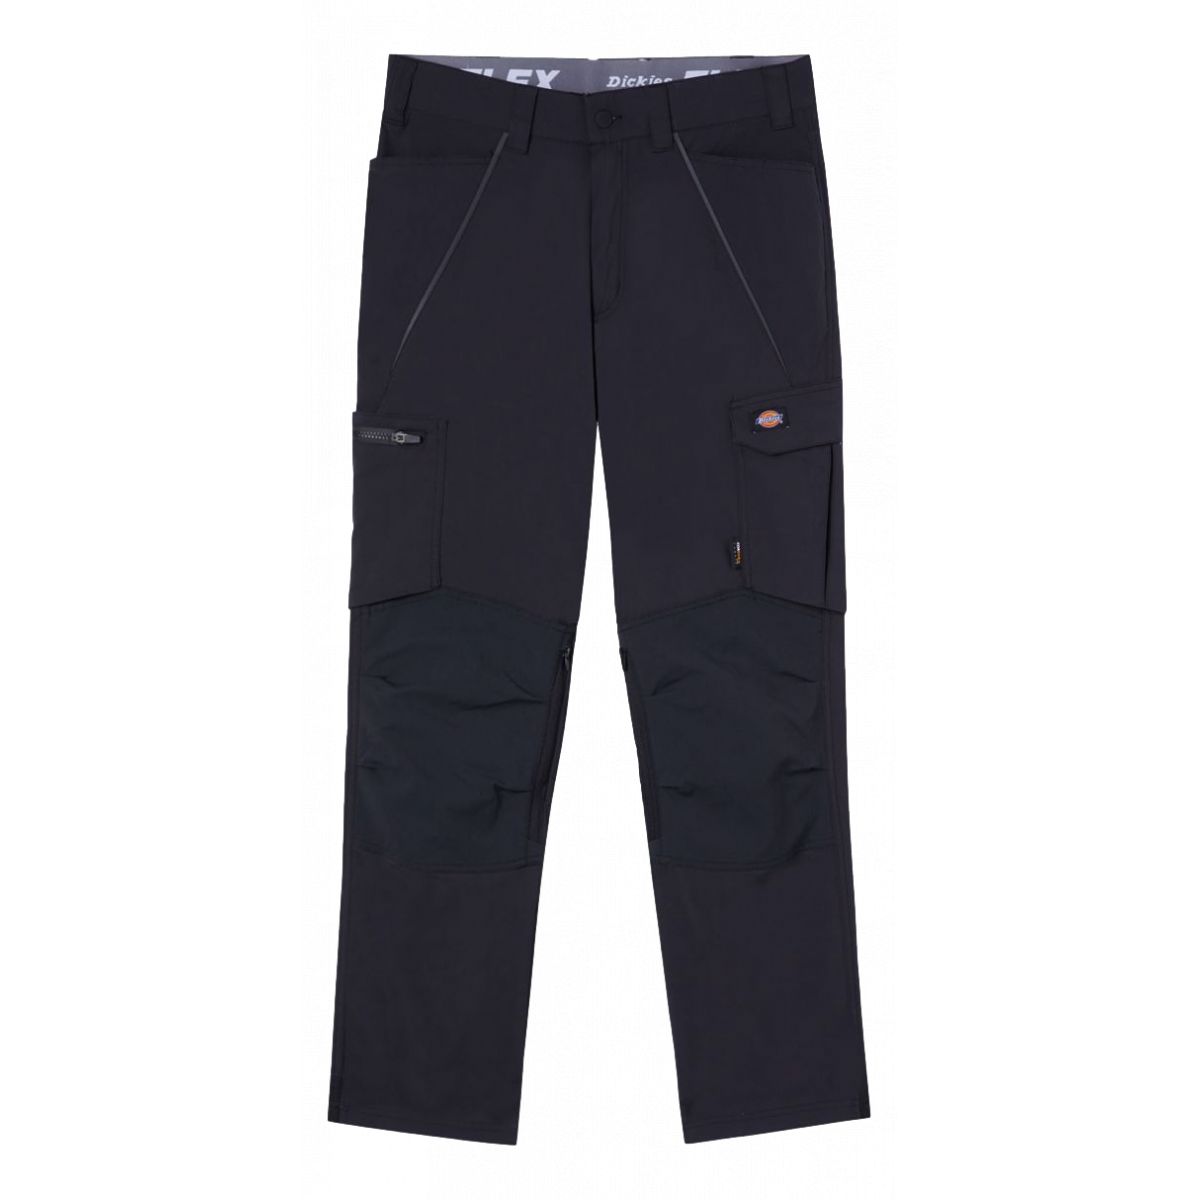 Pantalon léger Flex Noir - Dickies - Taille 44 0